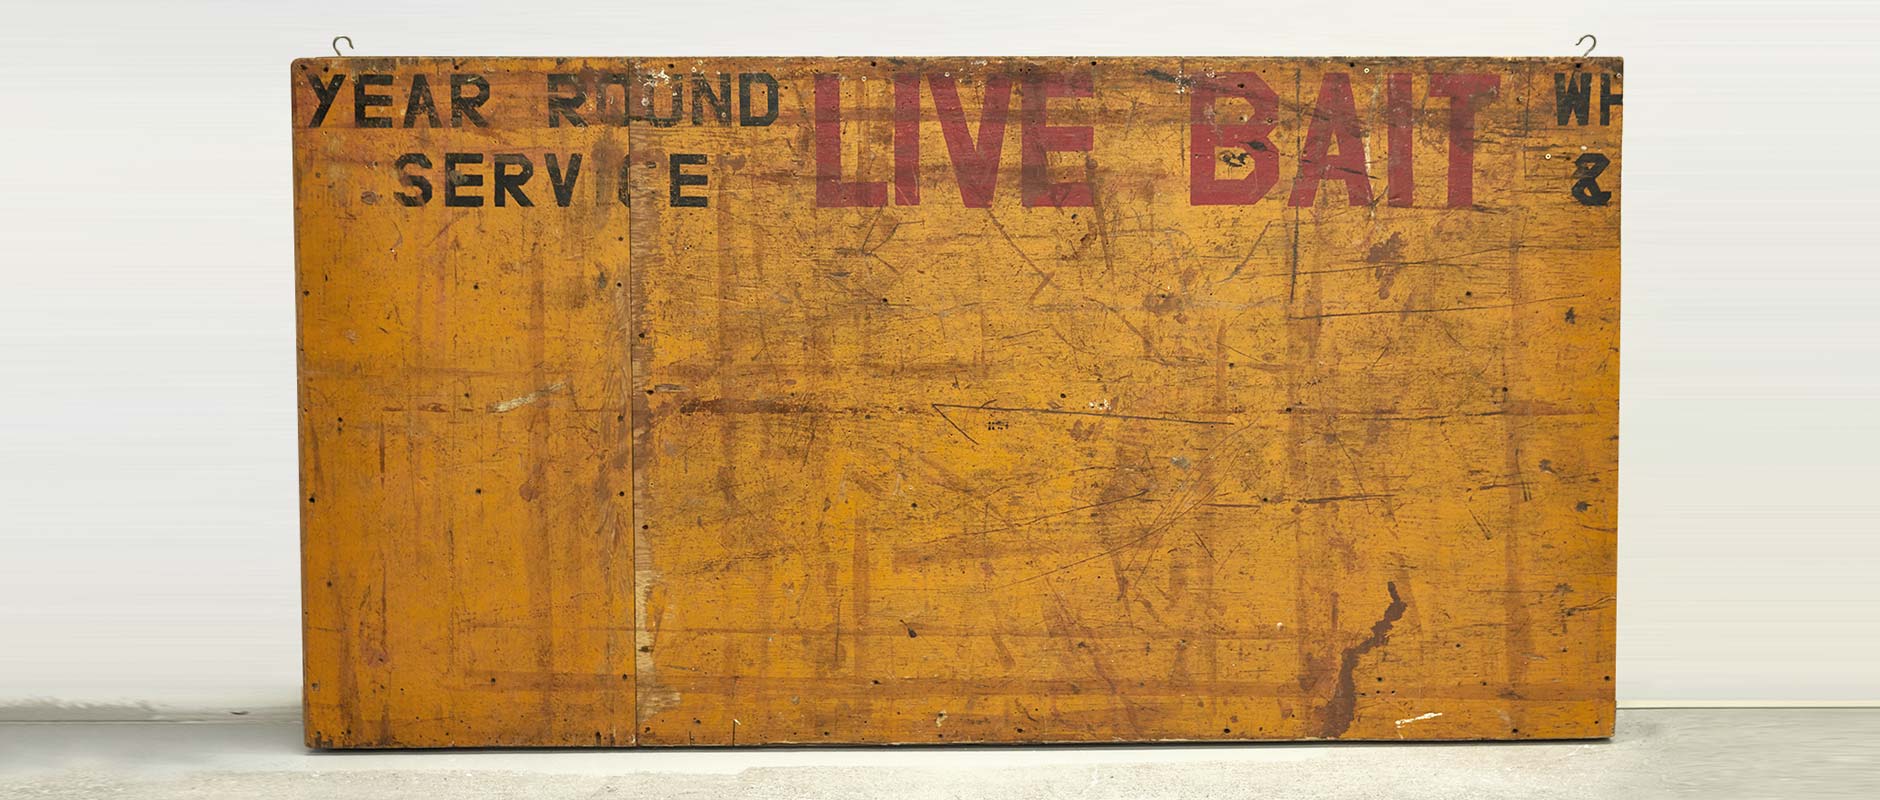 Vintage Live Bait sign from the original Parkdale location